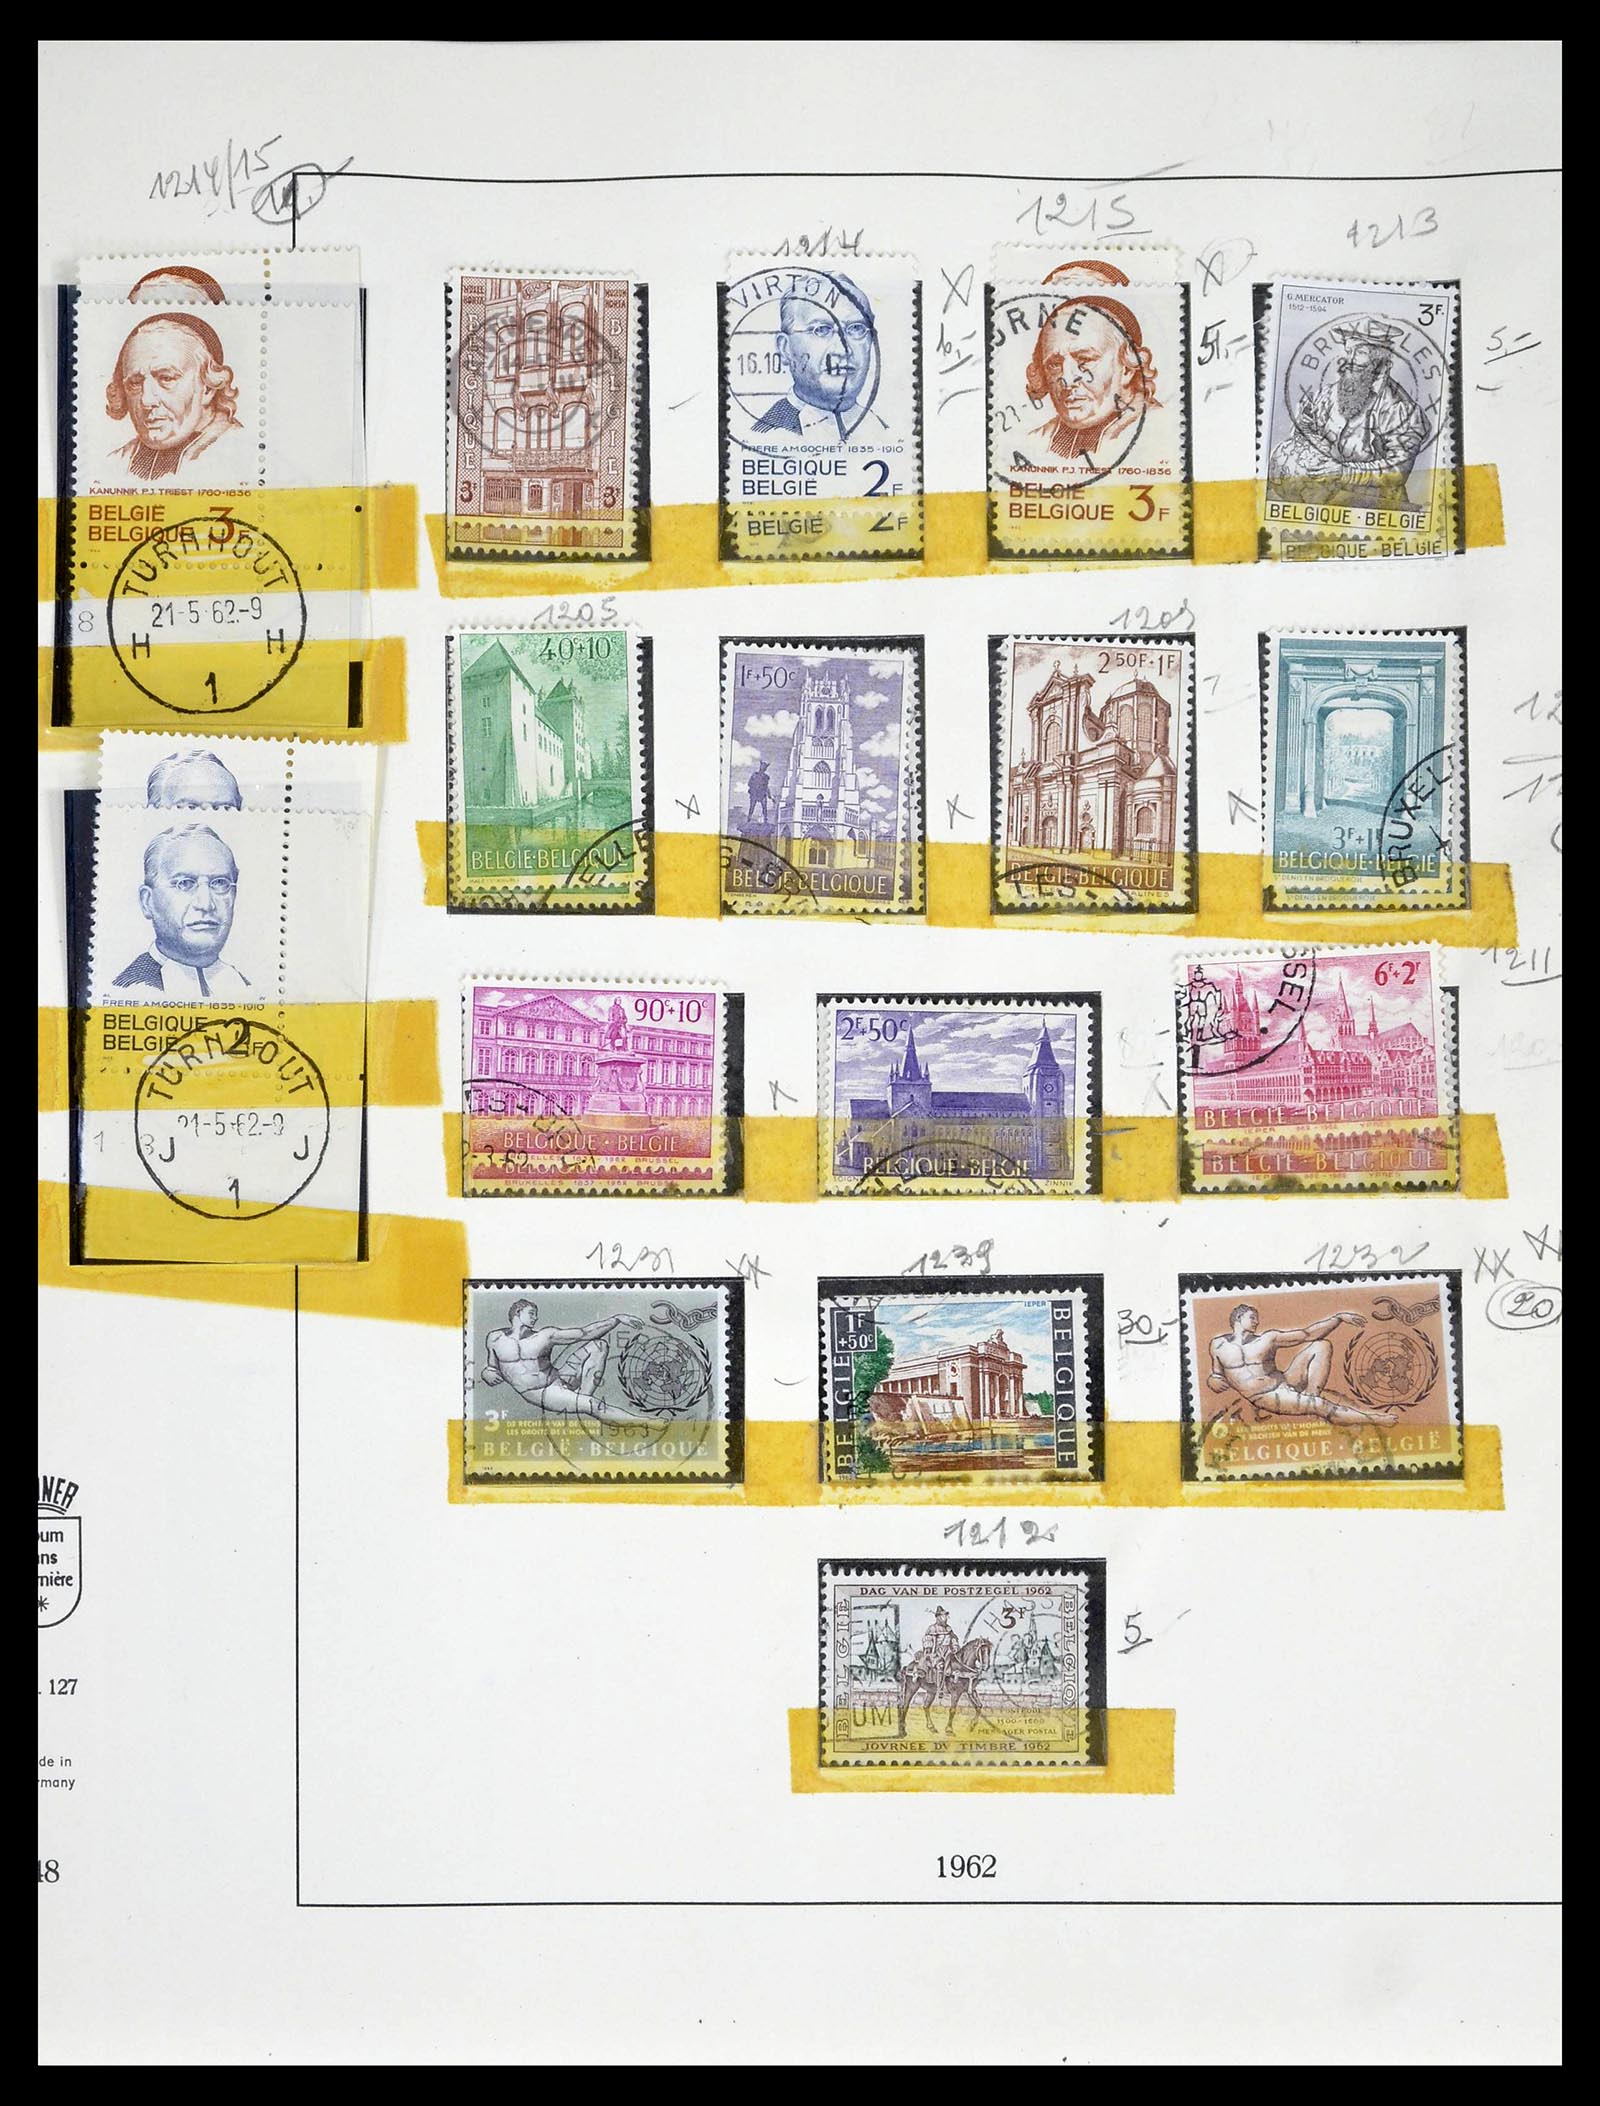 39265 0144 - Stamp collection 39265 Belgium 1849-1962.